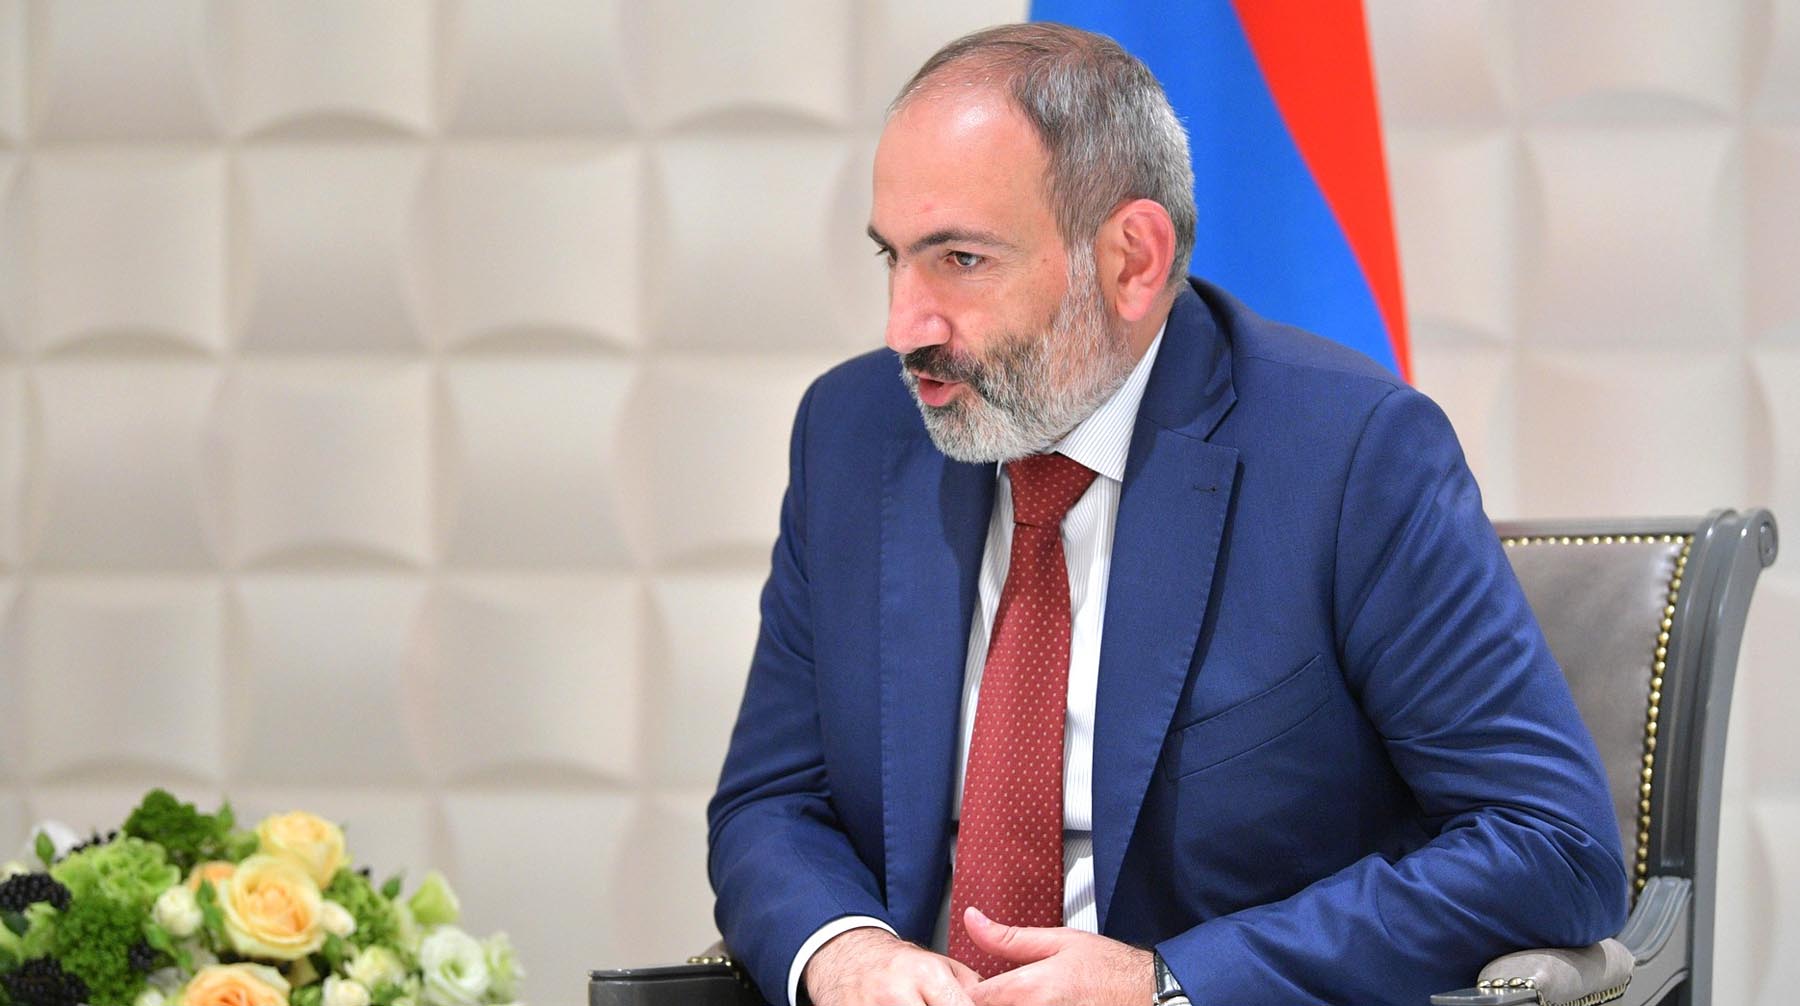 Также политики поговорили о ситуации в Нагорном Карабахе Фото: © Global Look Press / Kremlin Pool